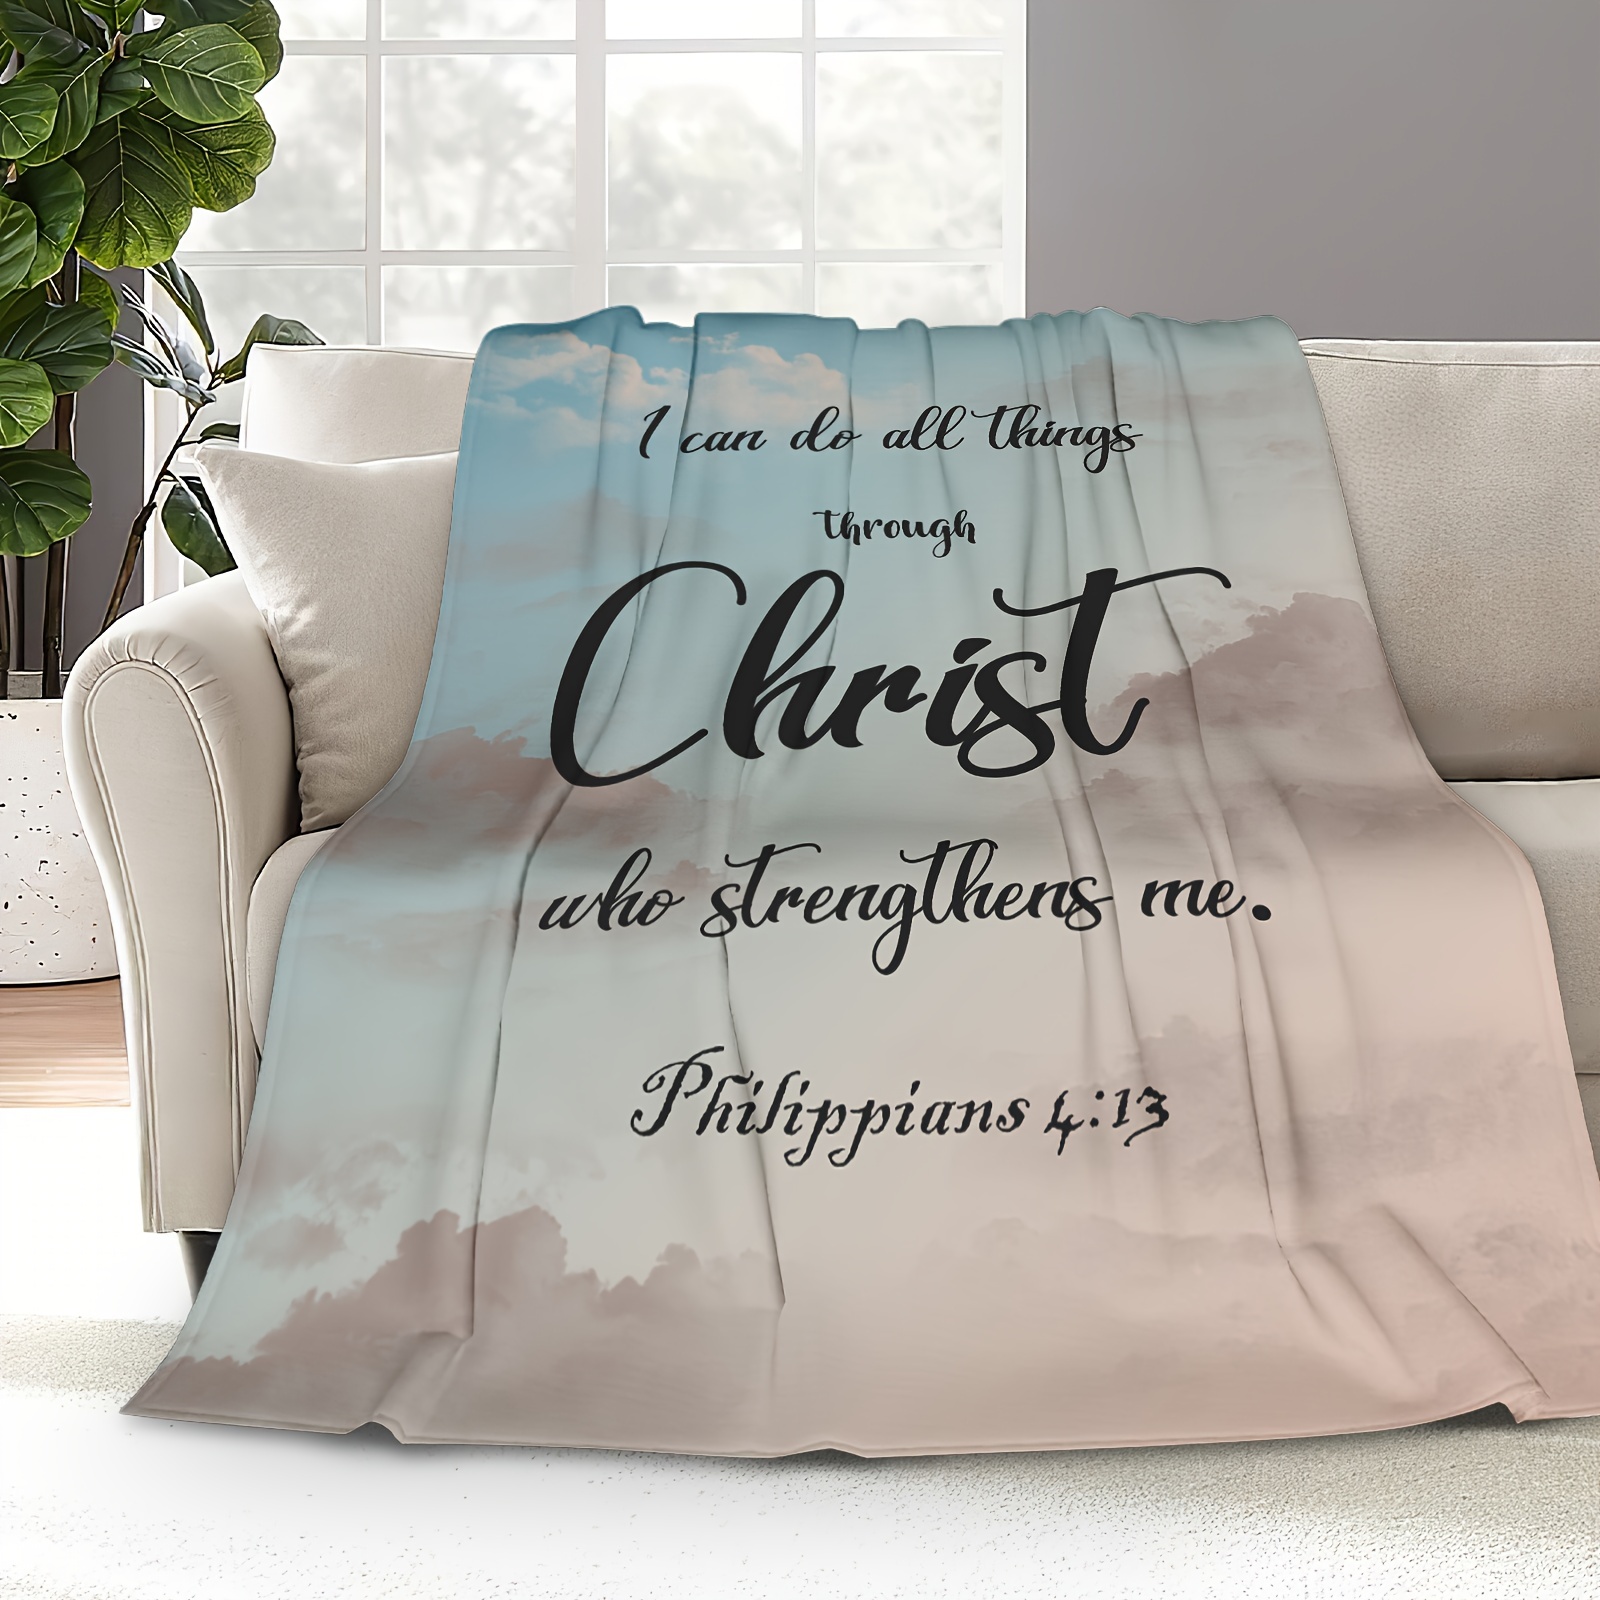 Positive Living' Bible Pillow